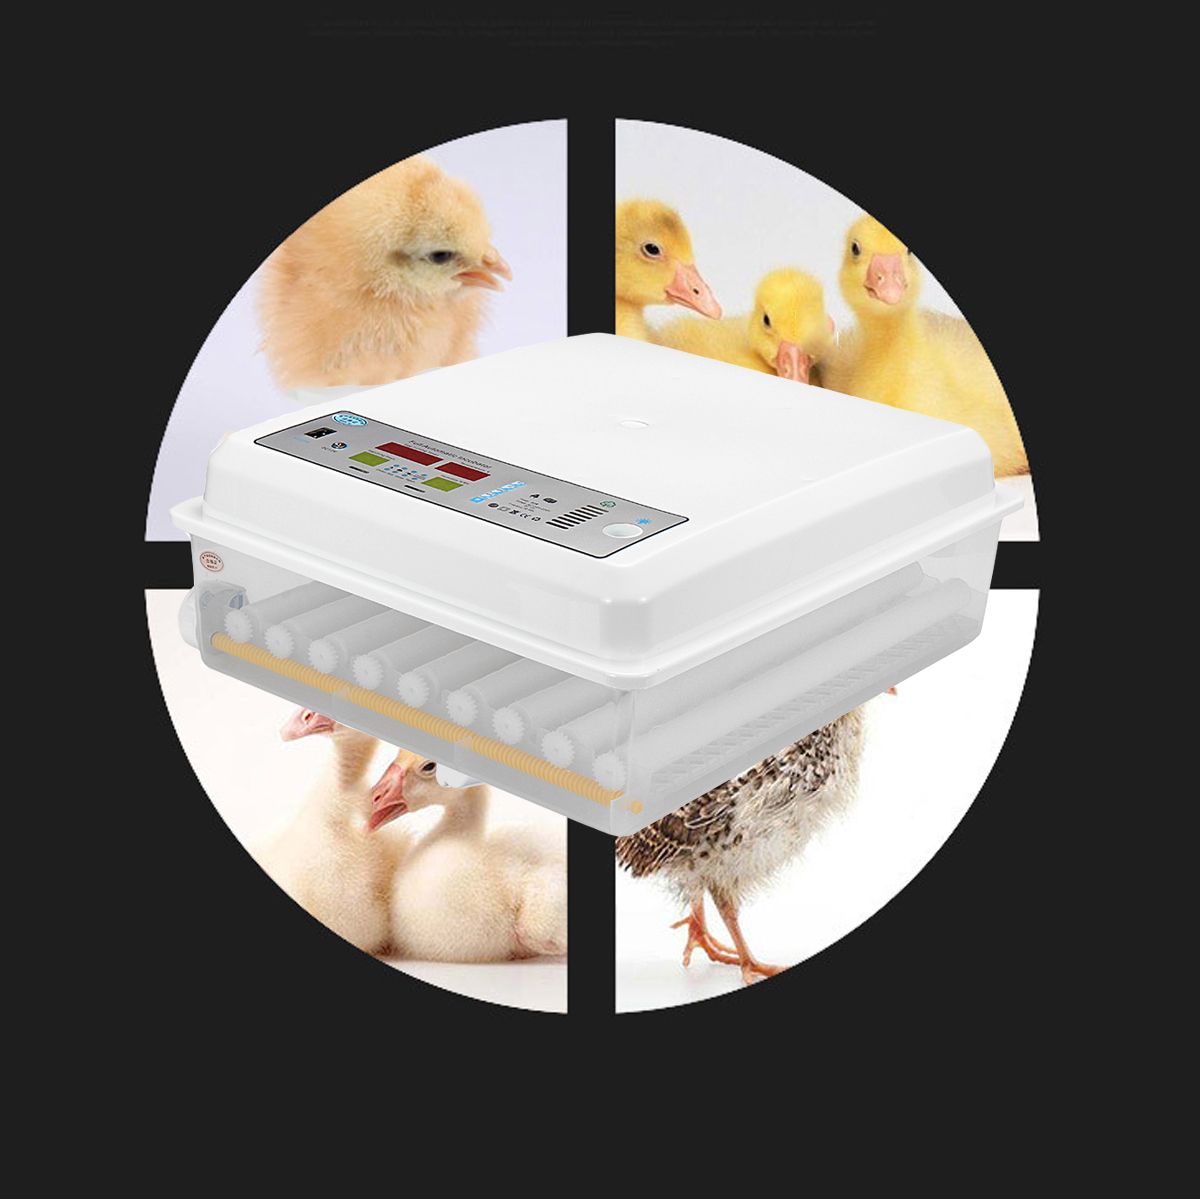 64-Eggs-Chicken-Automatic-Digital-Egg-Incubator-Hatchers-Temperature-Control-1717453